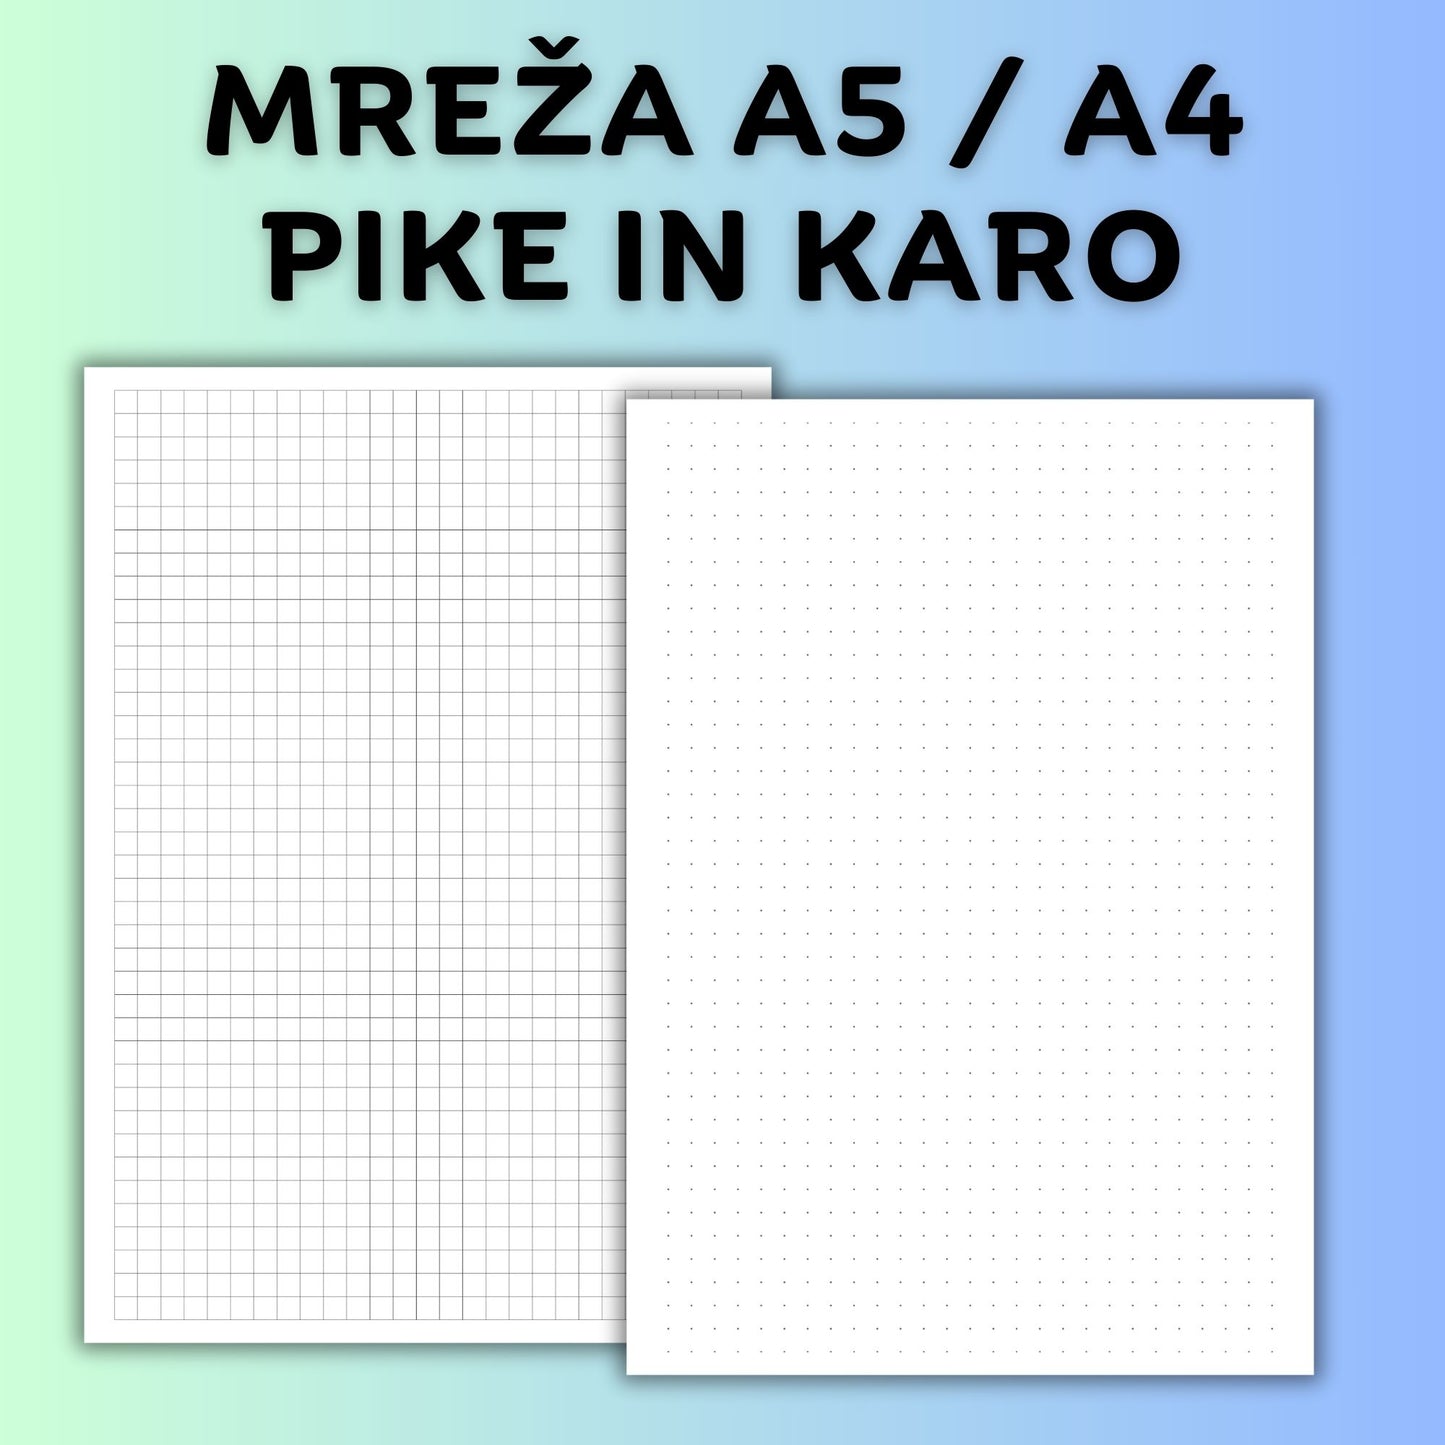 Mreža s pikami / karo - A4 in A5